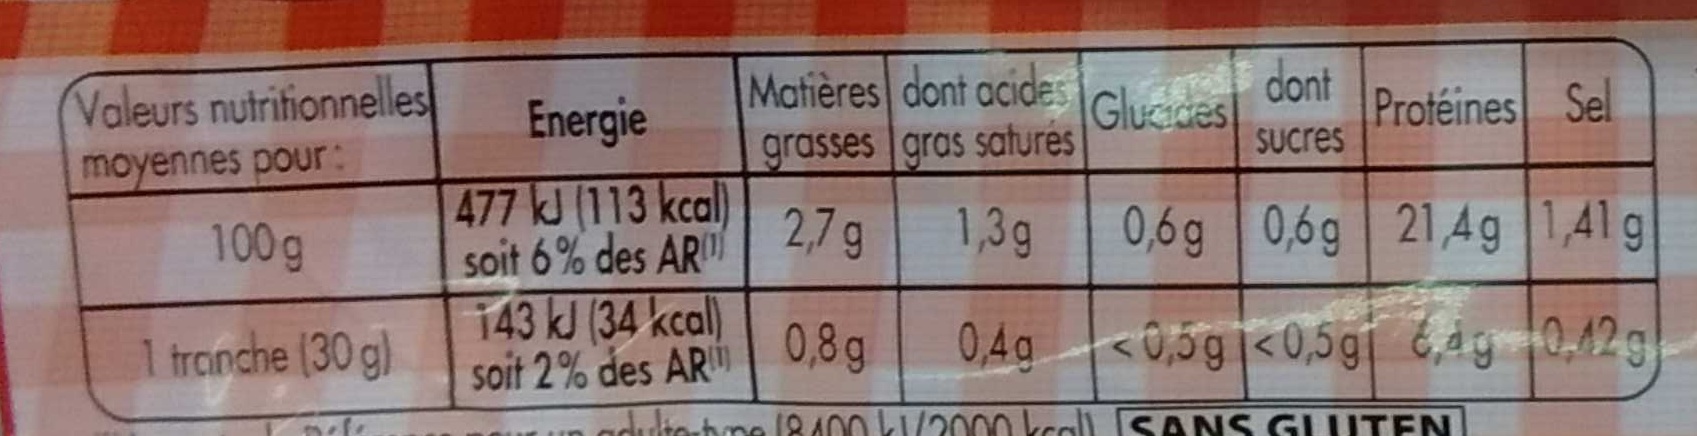 Jambon de paris sel réduit - Información nutricional - fr